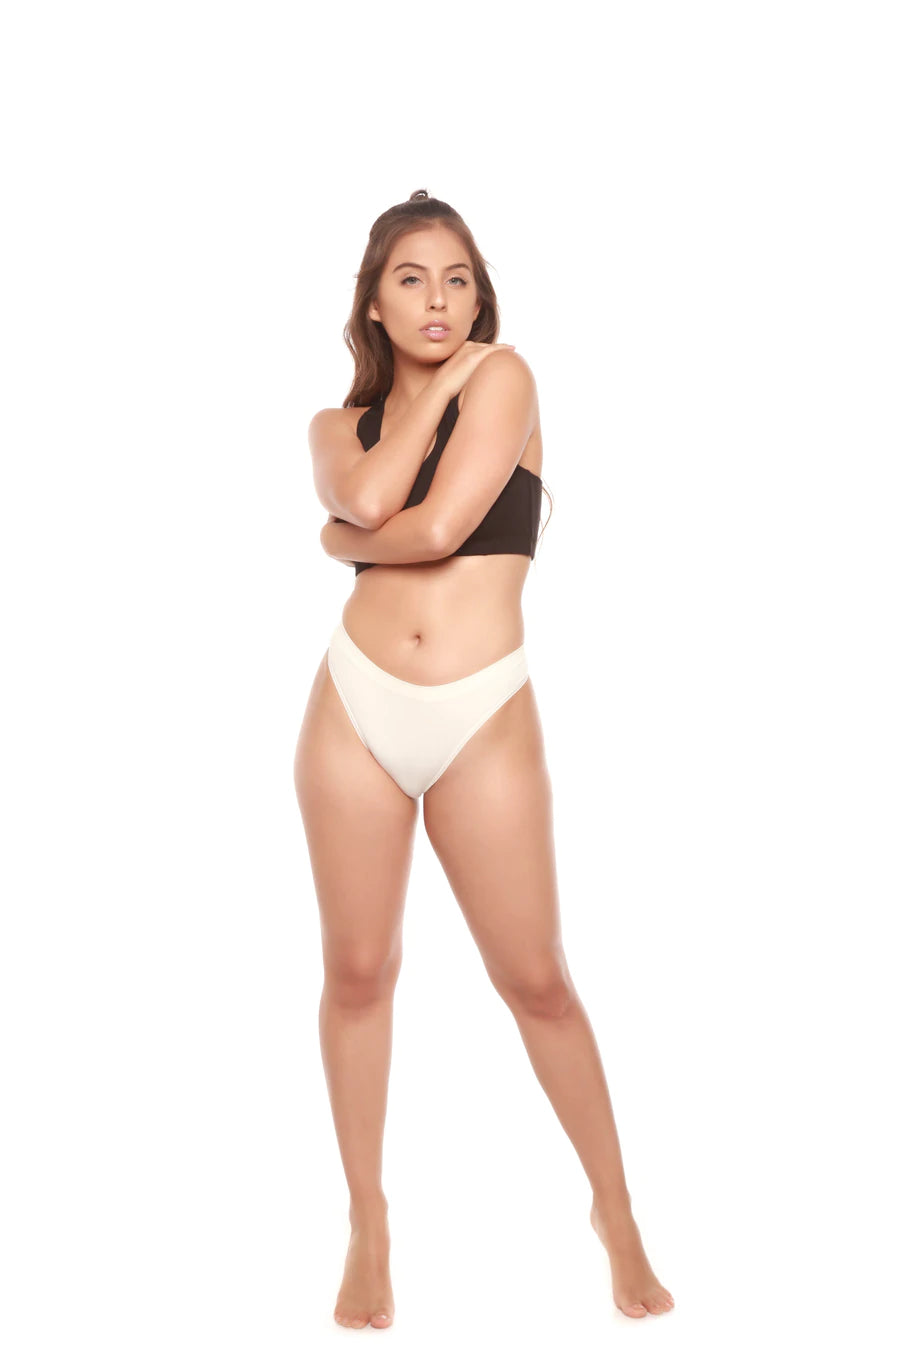 Flissie Womens Boxers - Comfortable Bamboo Loungewear Underwear